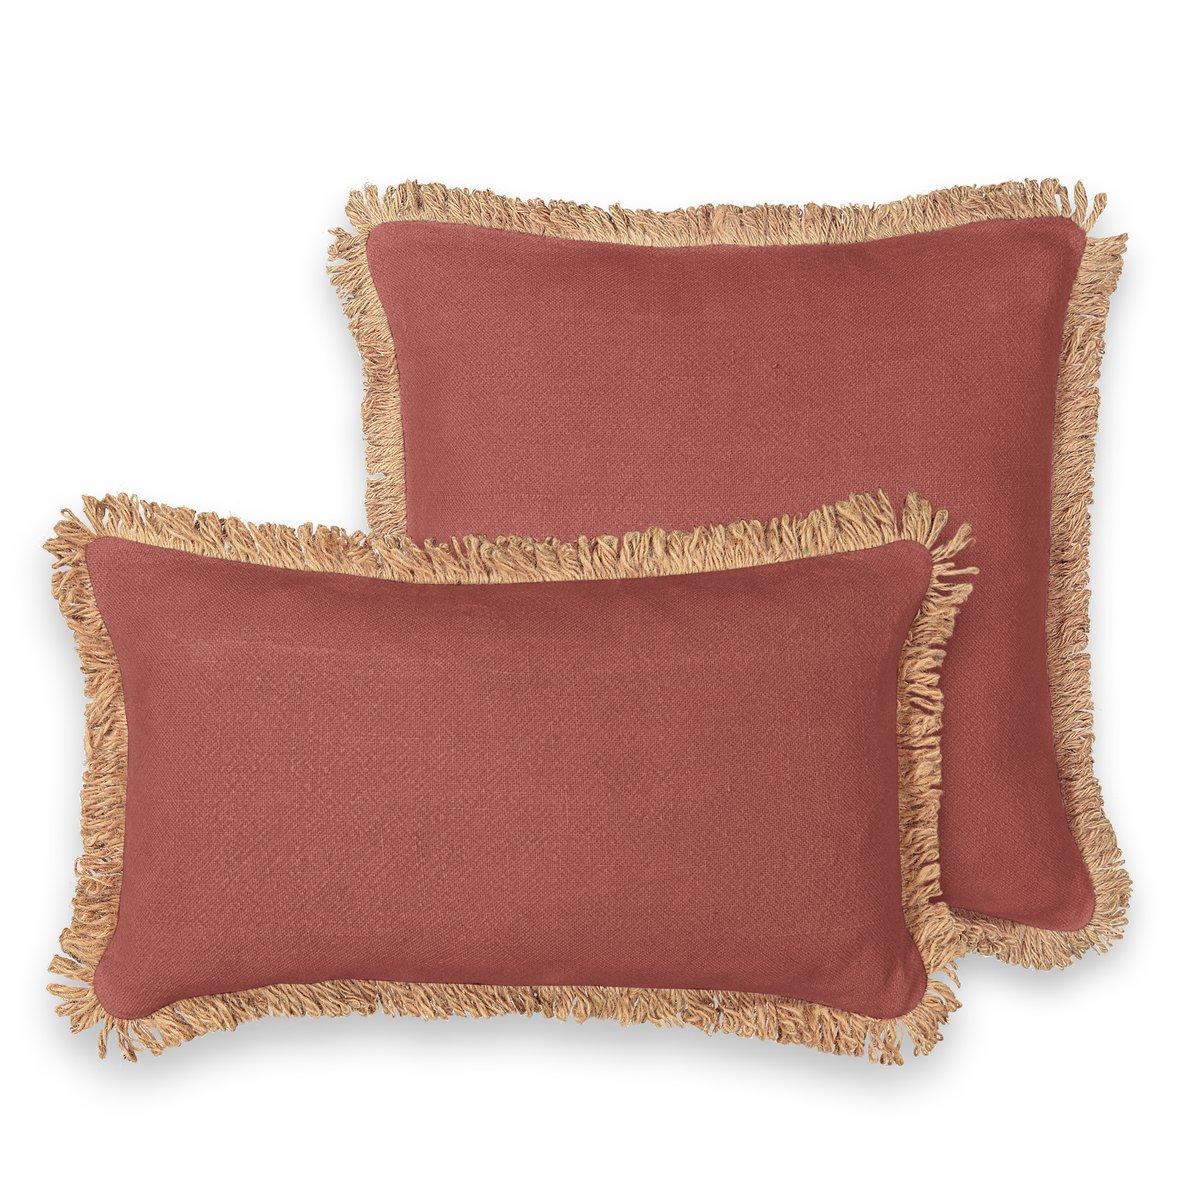 Чехол La Redoute На подушку из джута Jutty 50 x 50 см красный, размер 50 x 50 см - фото 3